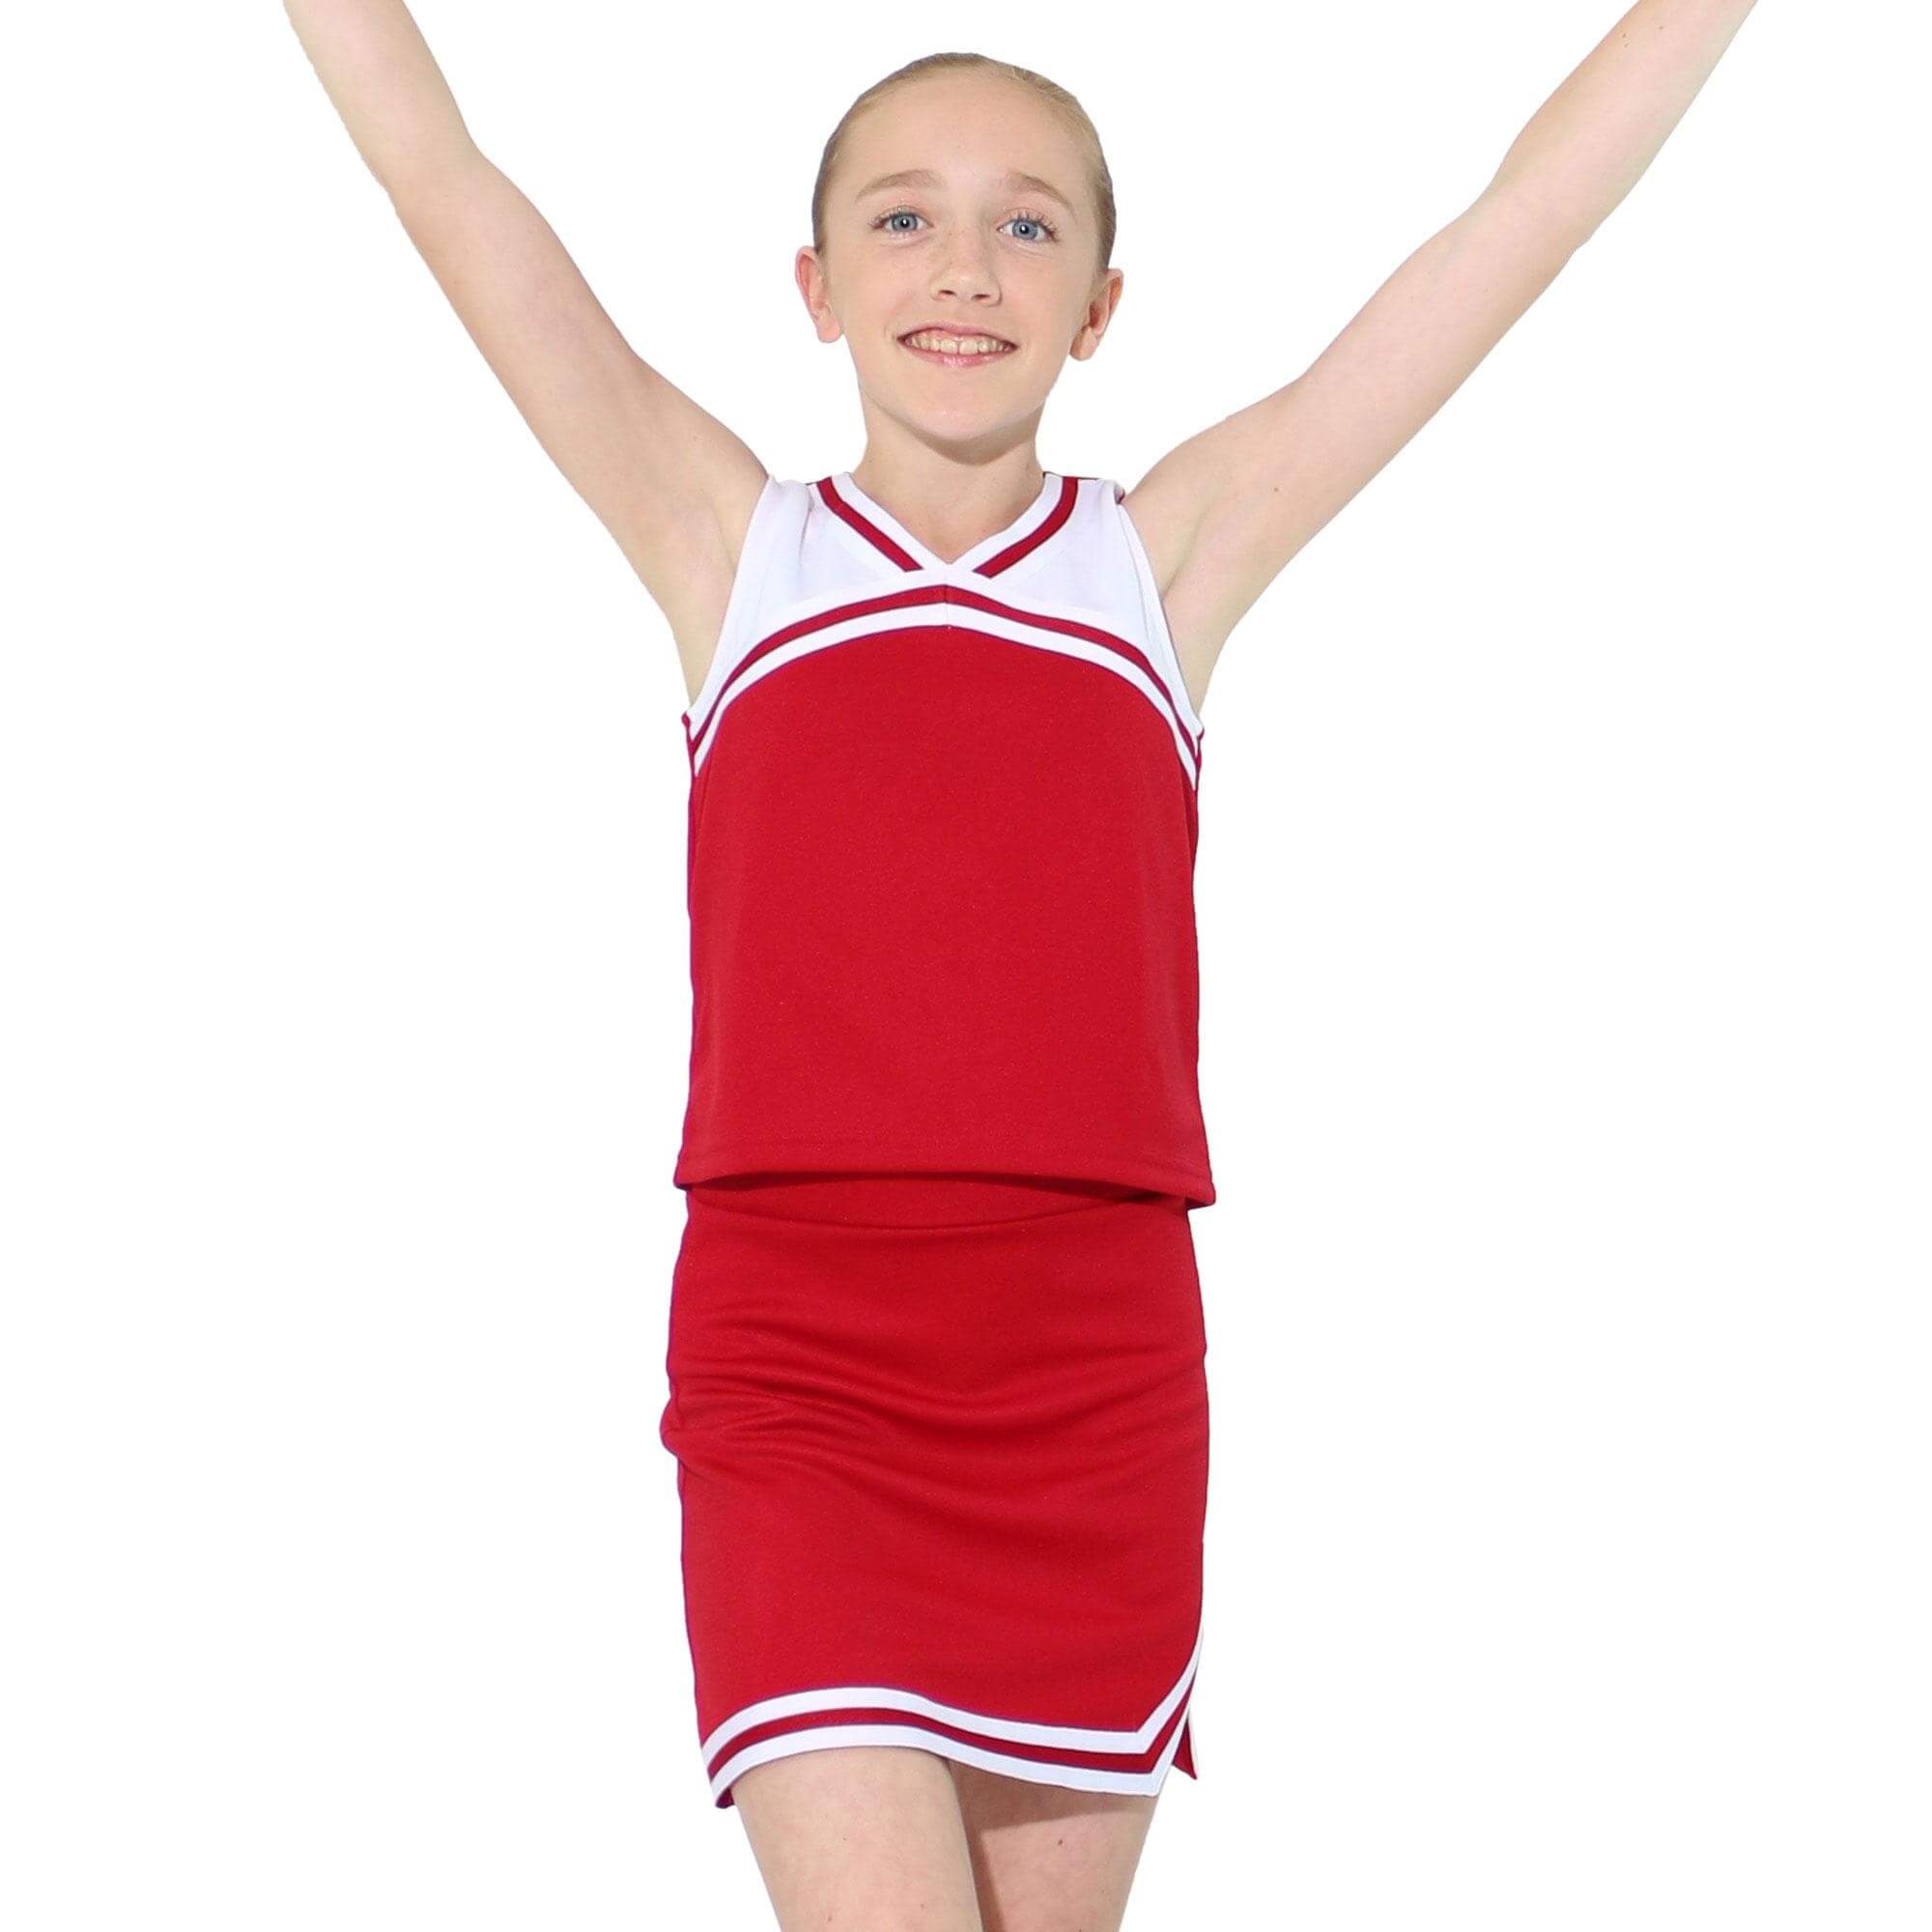 Danzcue Child Classic Cheerleaders Uniform Shell Top - Click Image to Close